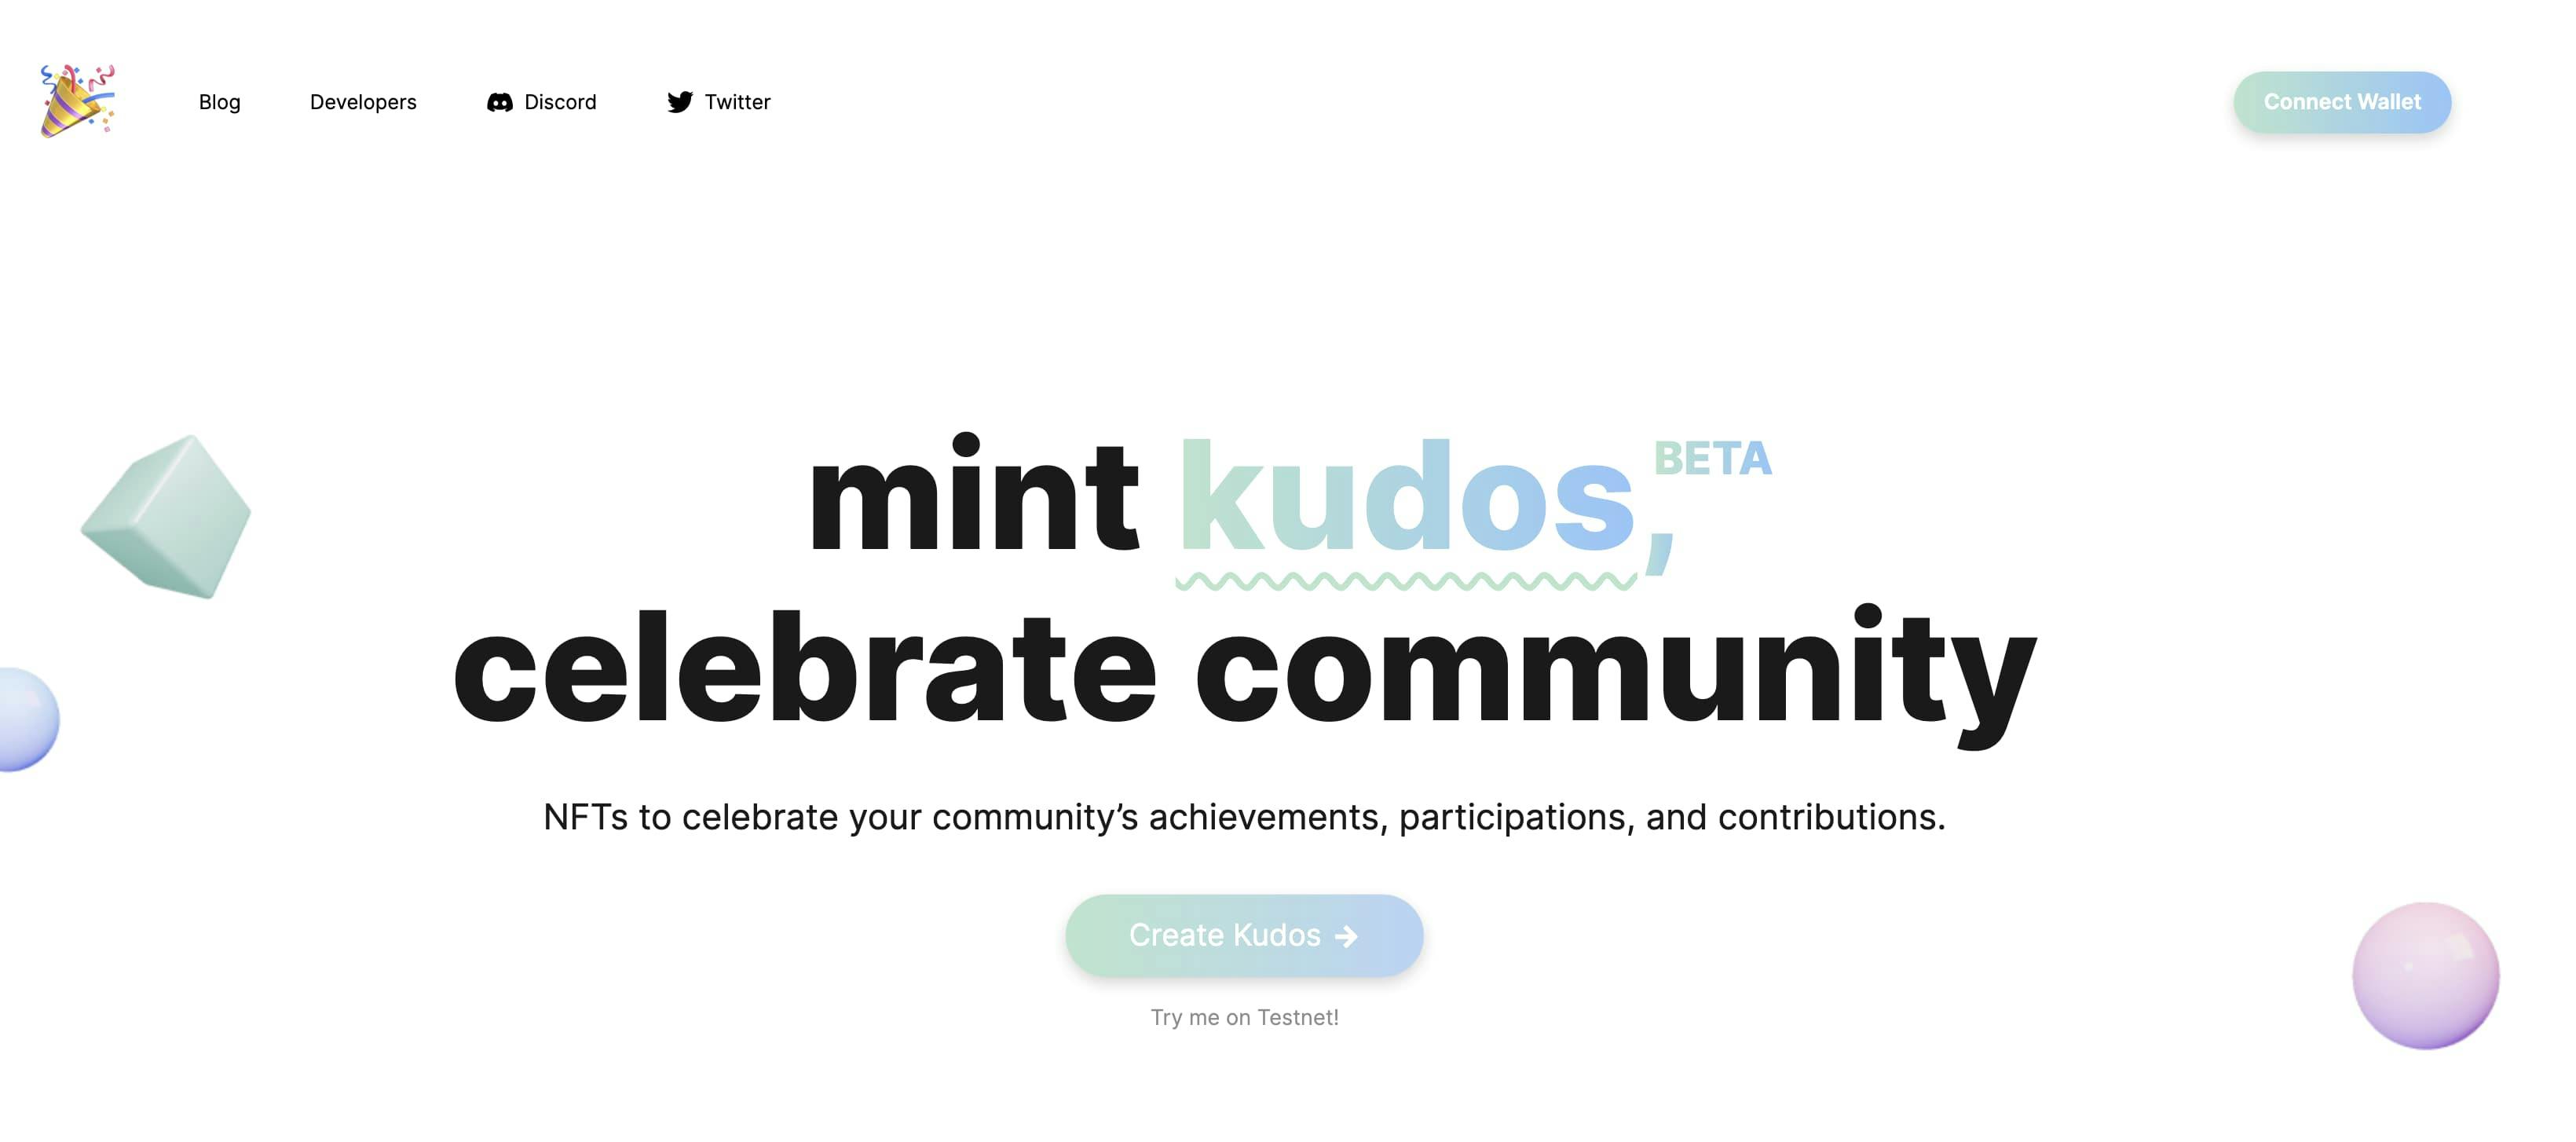 Mint Kudos DAO Achievement Tool - Website Homepage